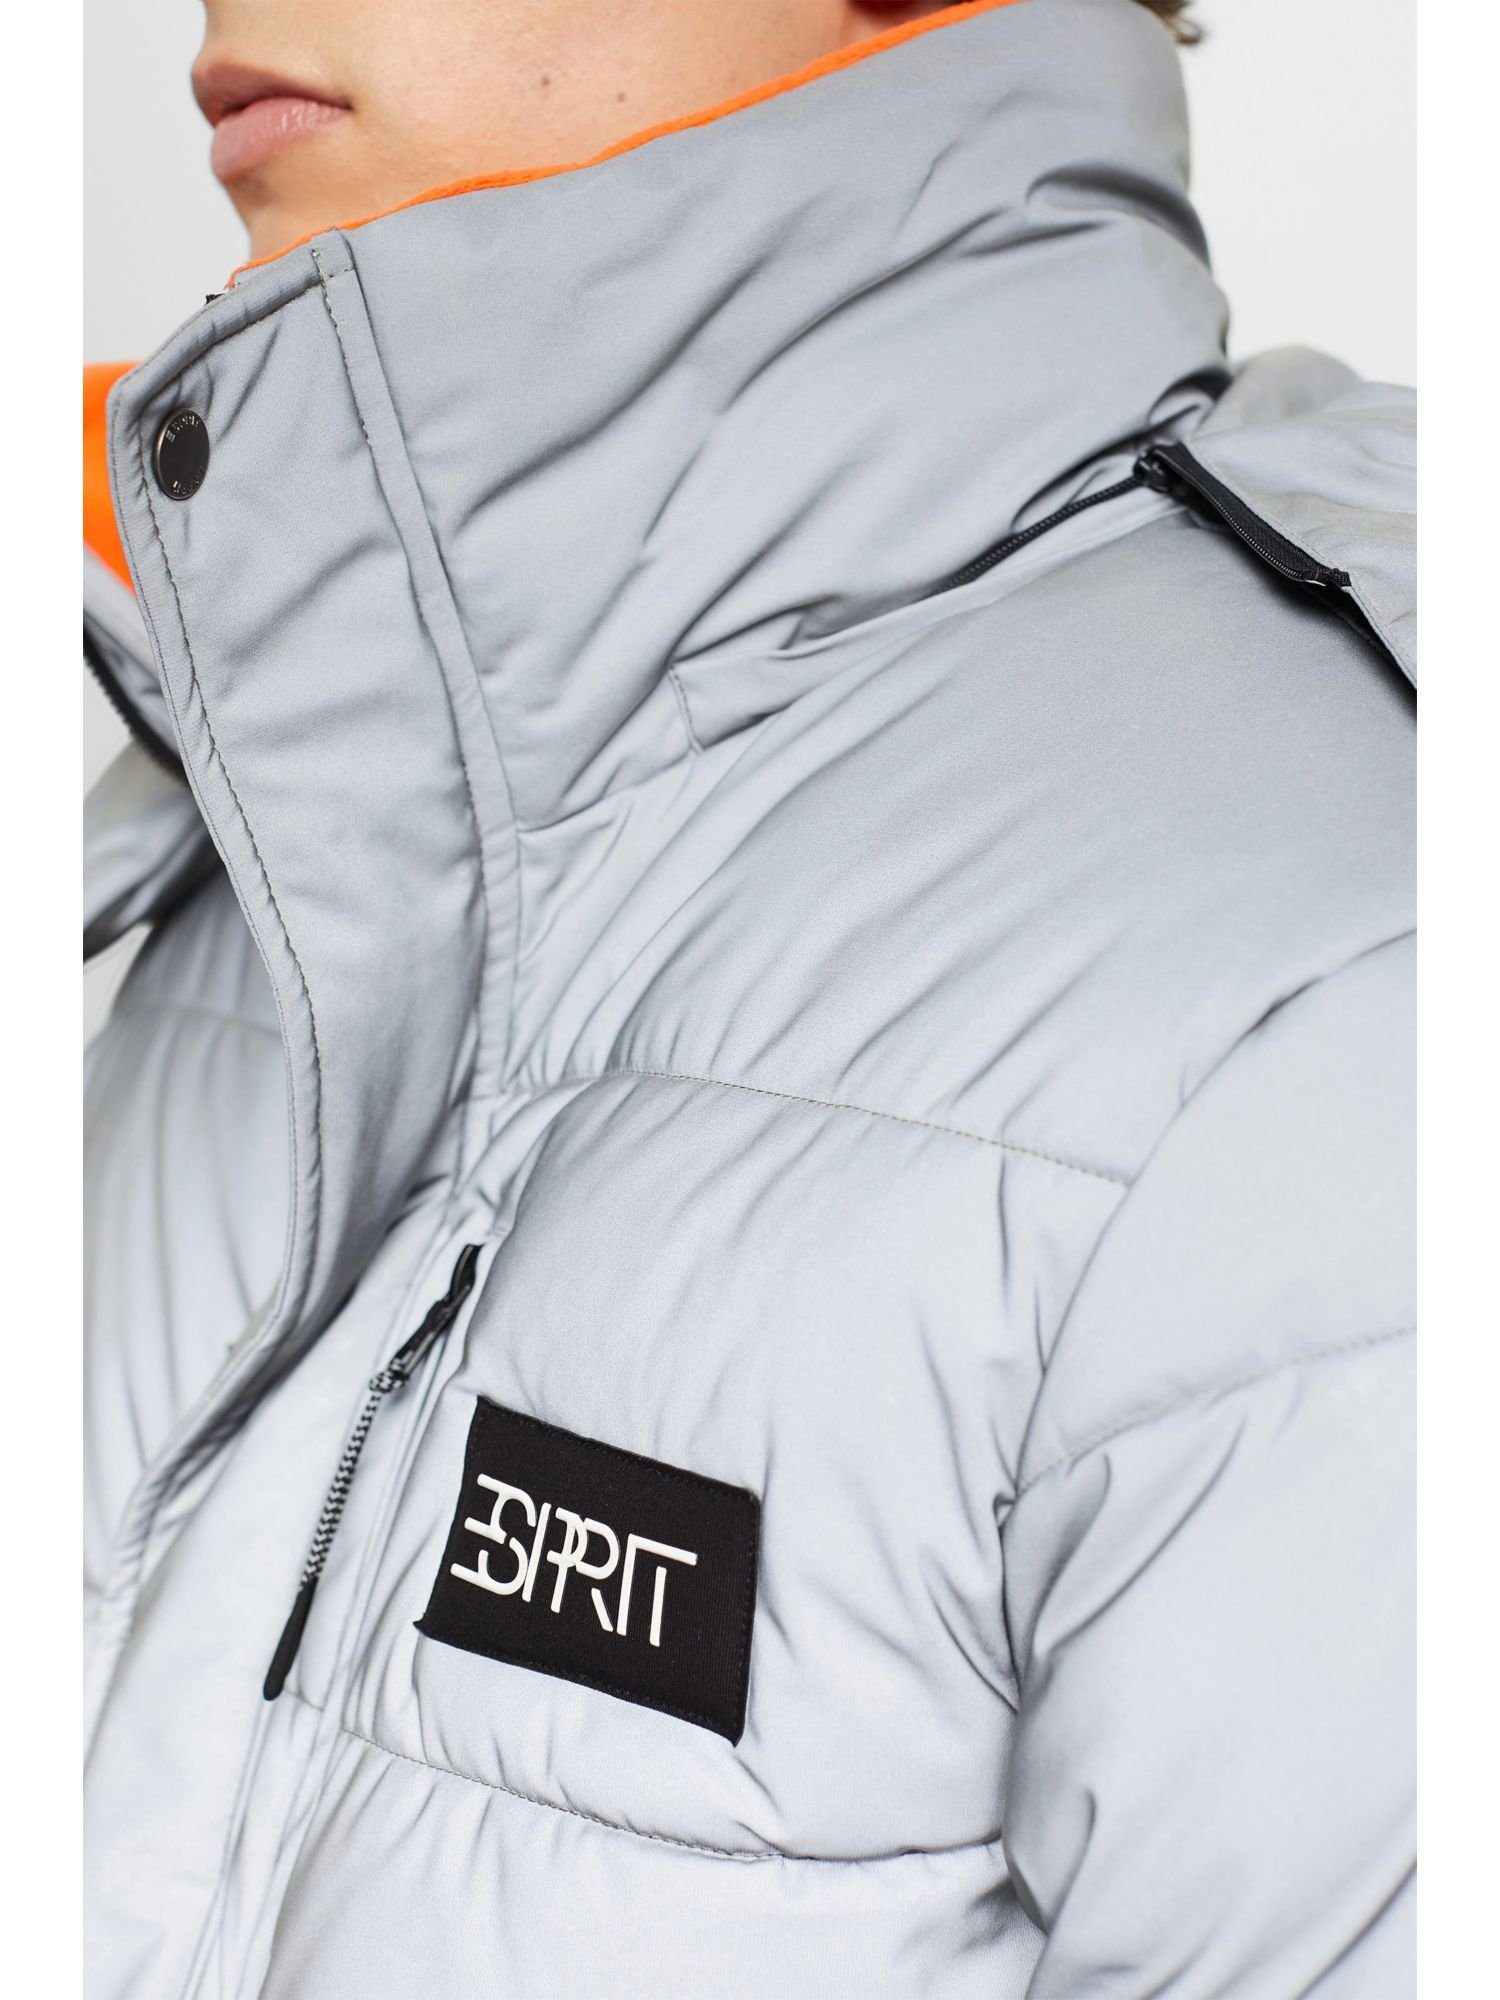 Oversize-Look Jacket Kurze Steppjacke Esprit Puffer im